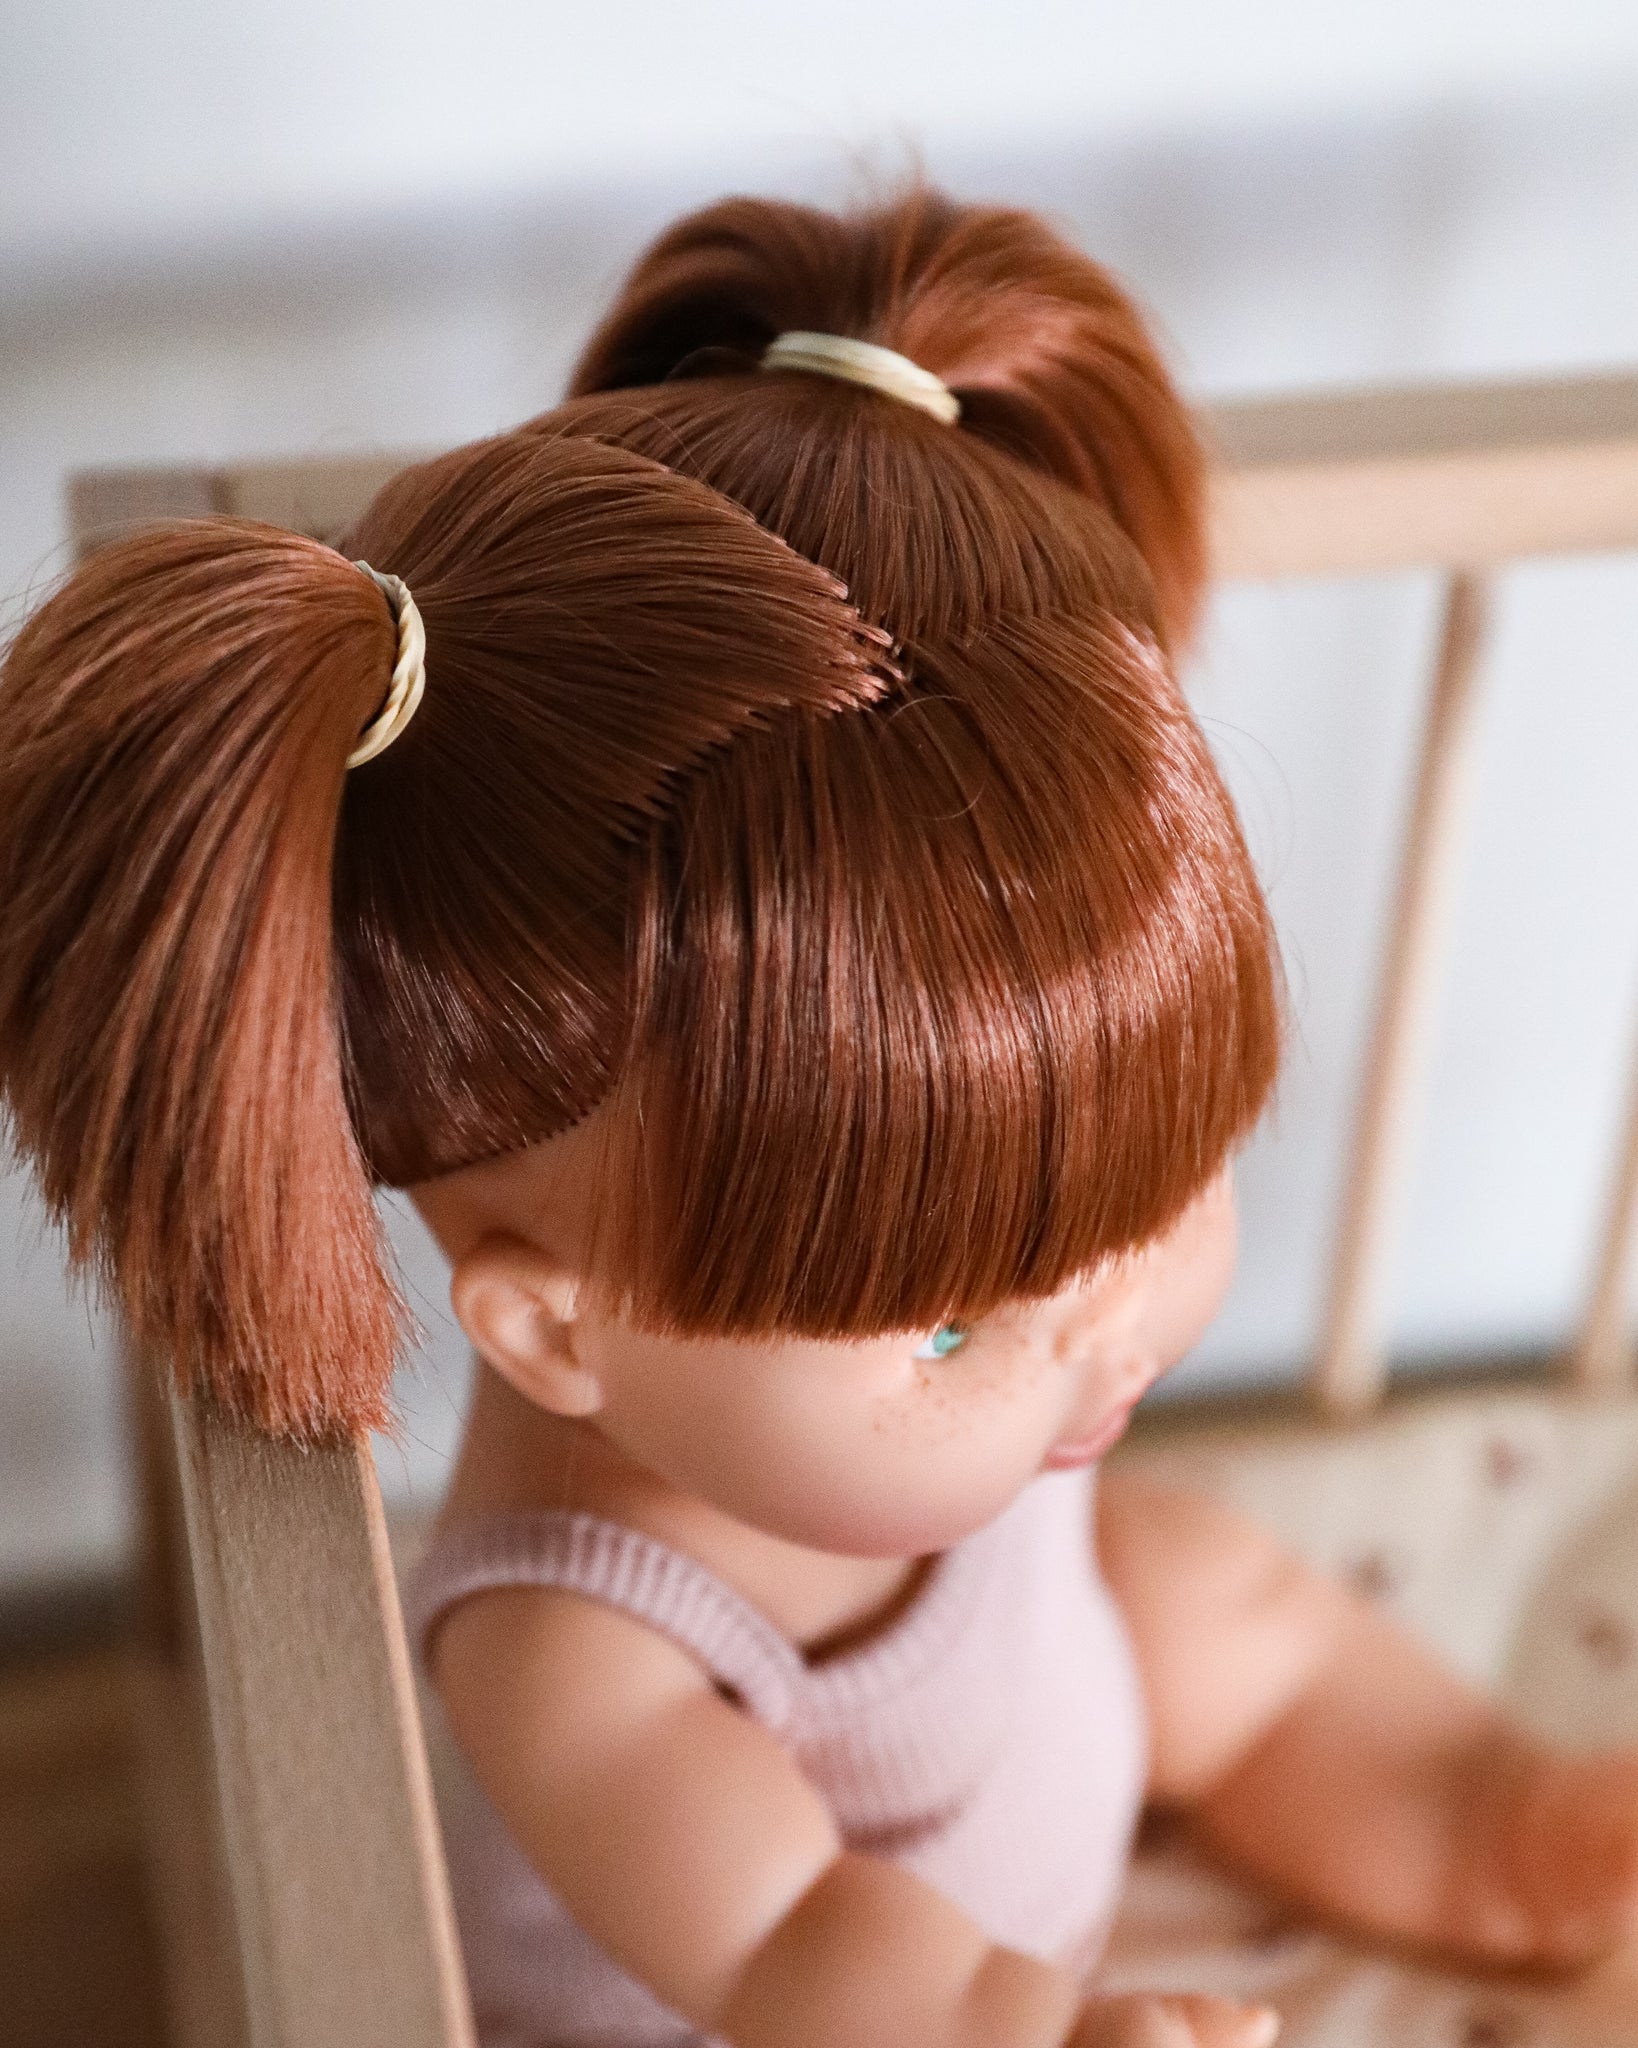 Minikane Doll - Gabrielle Baby Girl Doll